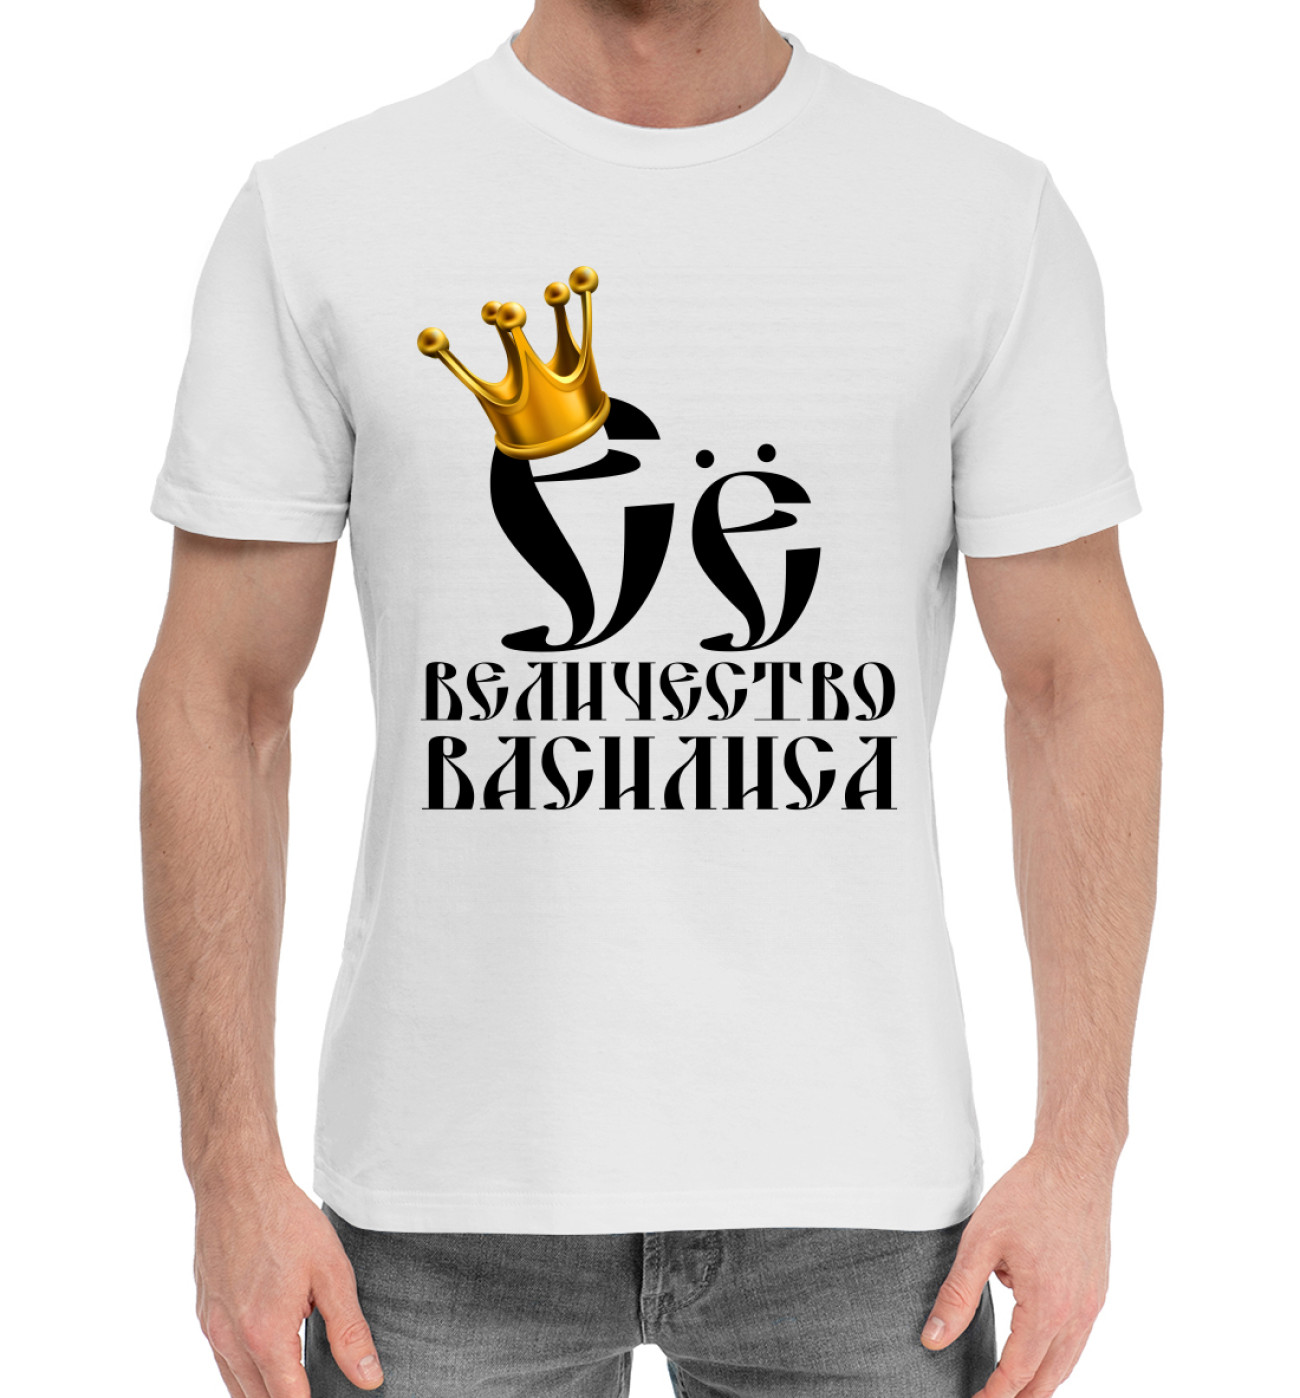 Мужская Хлопковая футболка Её величество Василиса, артикул: VSS-460107-hfu-2